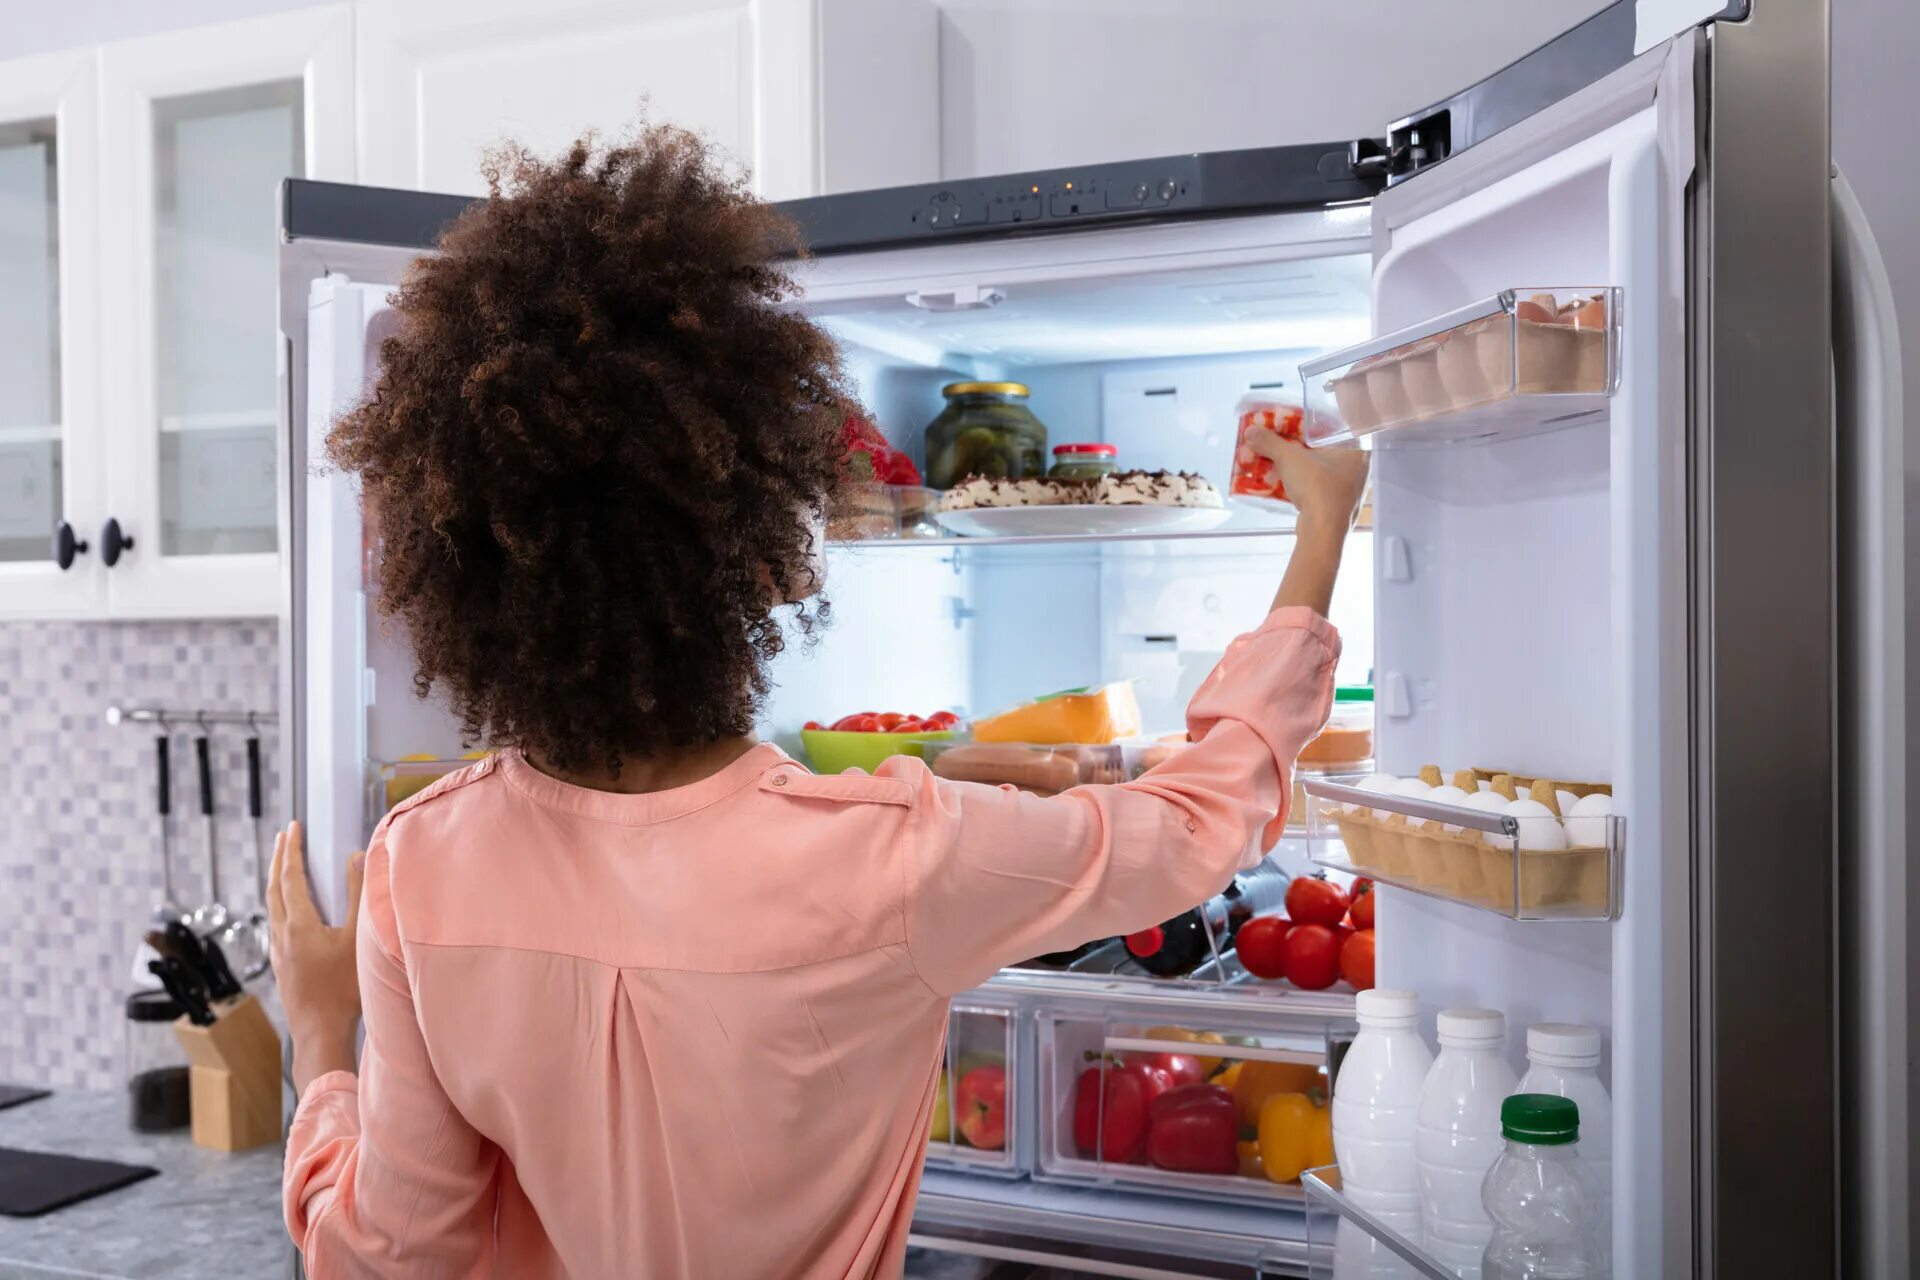 There are some eggs in the fridge. Холодильник с едой. Открывает холодильник. Женщина на кухне холодильник. Девушка у холодильника.